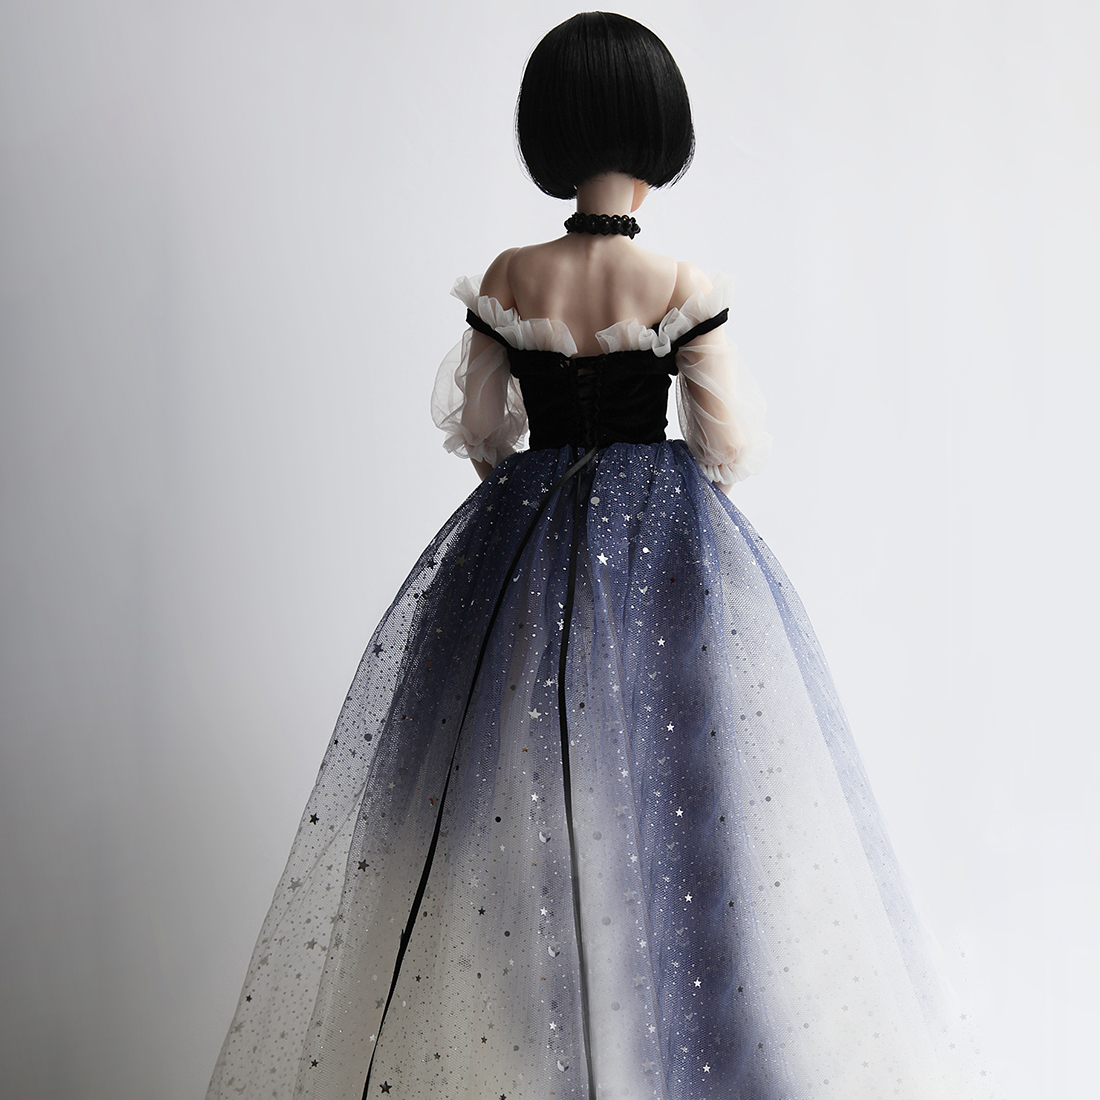 MODIKERBJD Wedding Dress Dream Star Feather Clothes Set for 1/4 1/3 BJD Dolls Girl Costume - No Doll